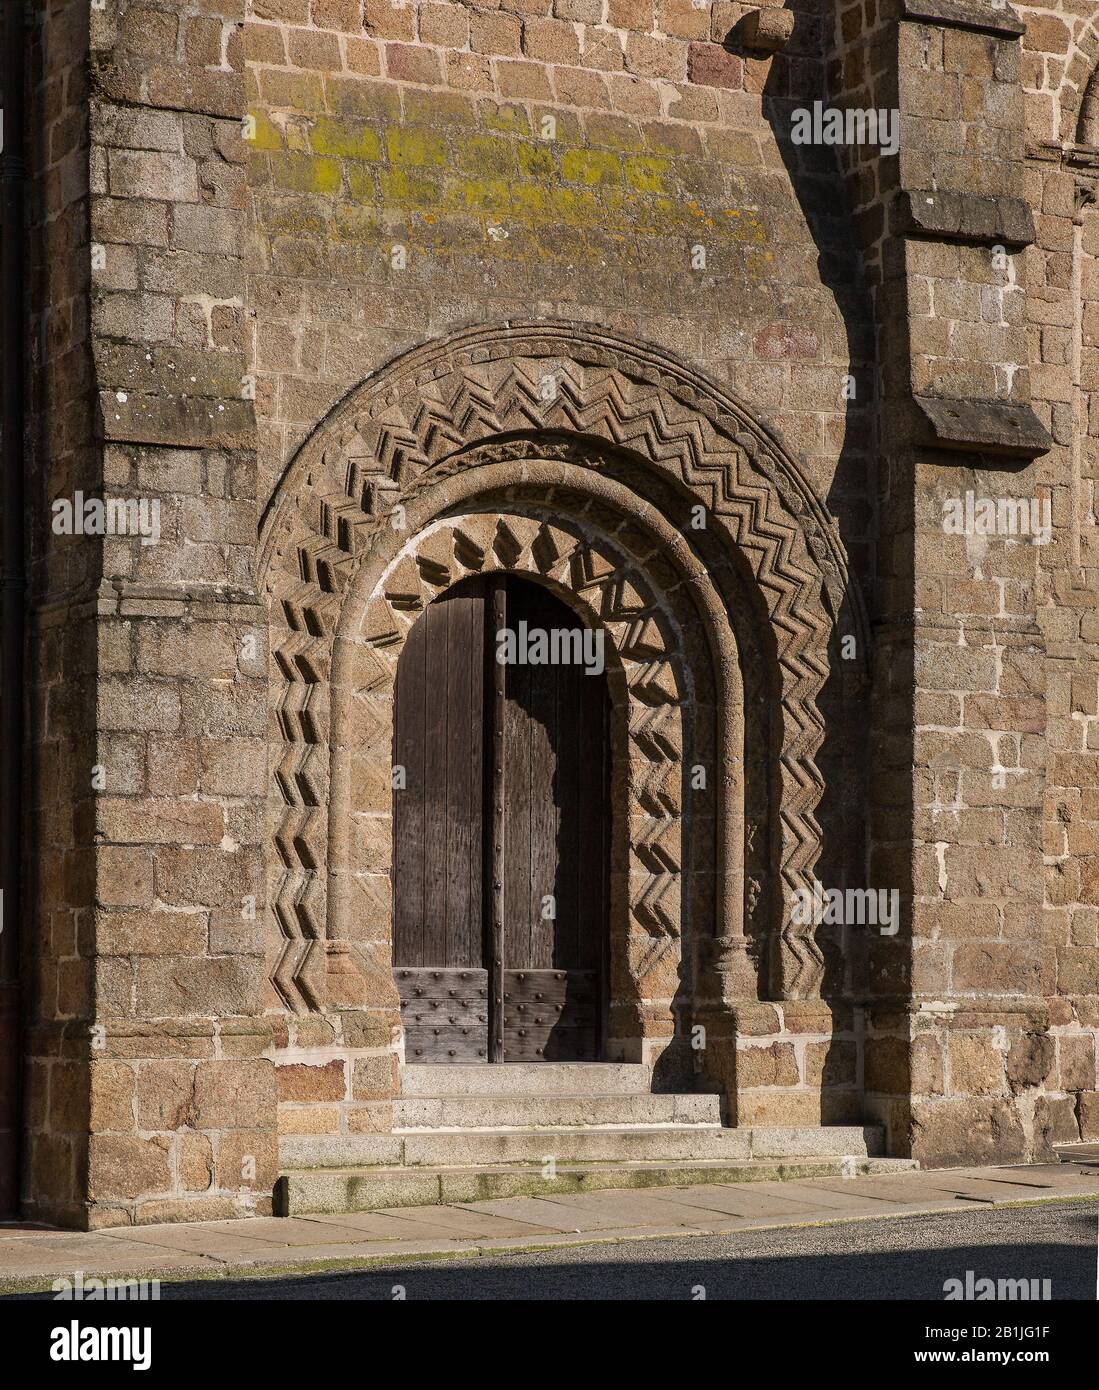 Mortain, Südportal Der Abteikirche. Stiftskirche St-Evroult romanisches Süddportal mit Zackenfries 12 Jh Foto de stock